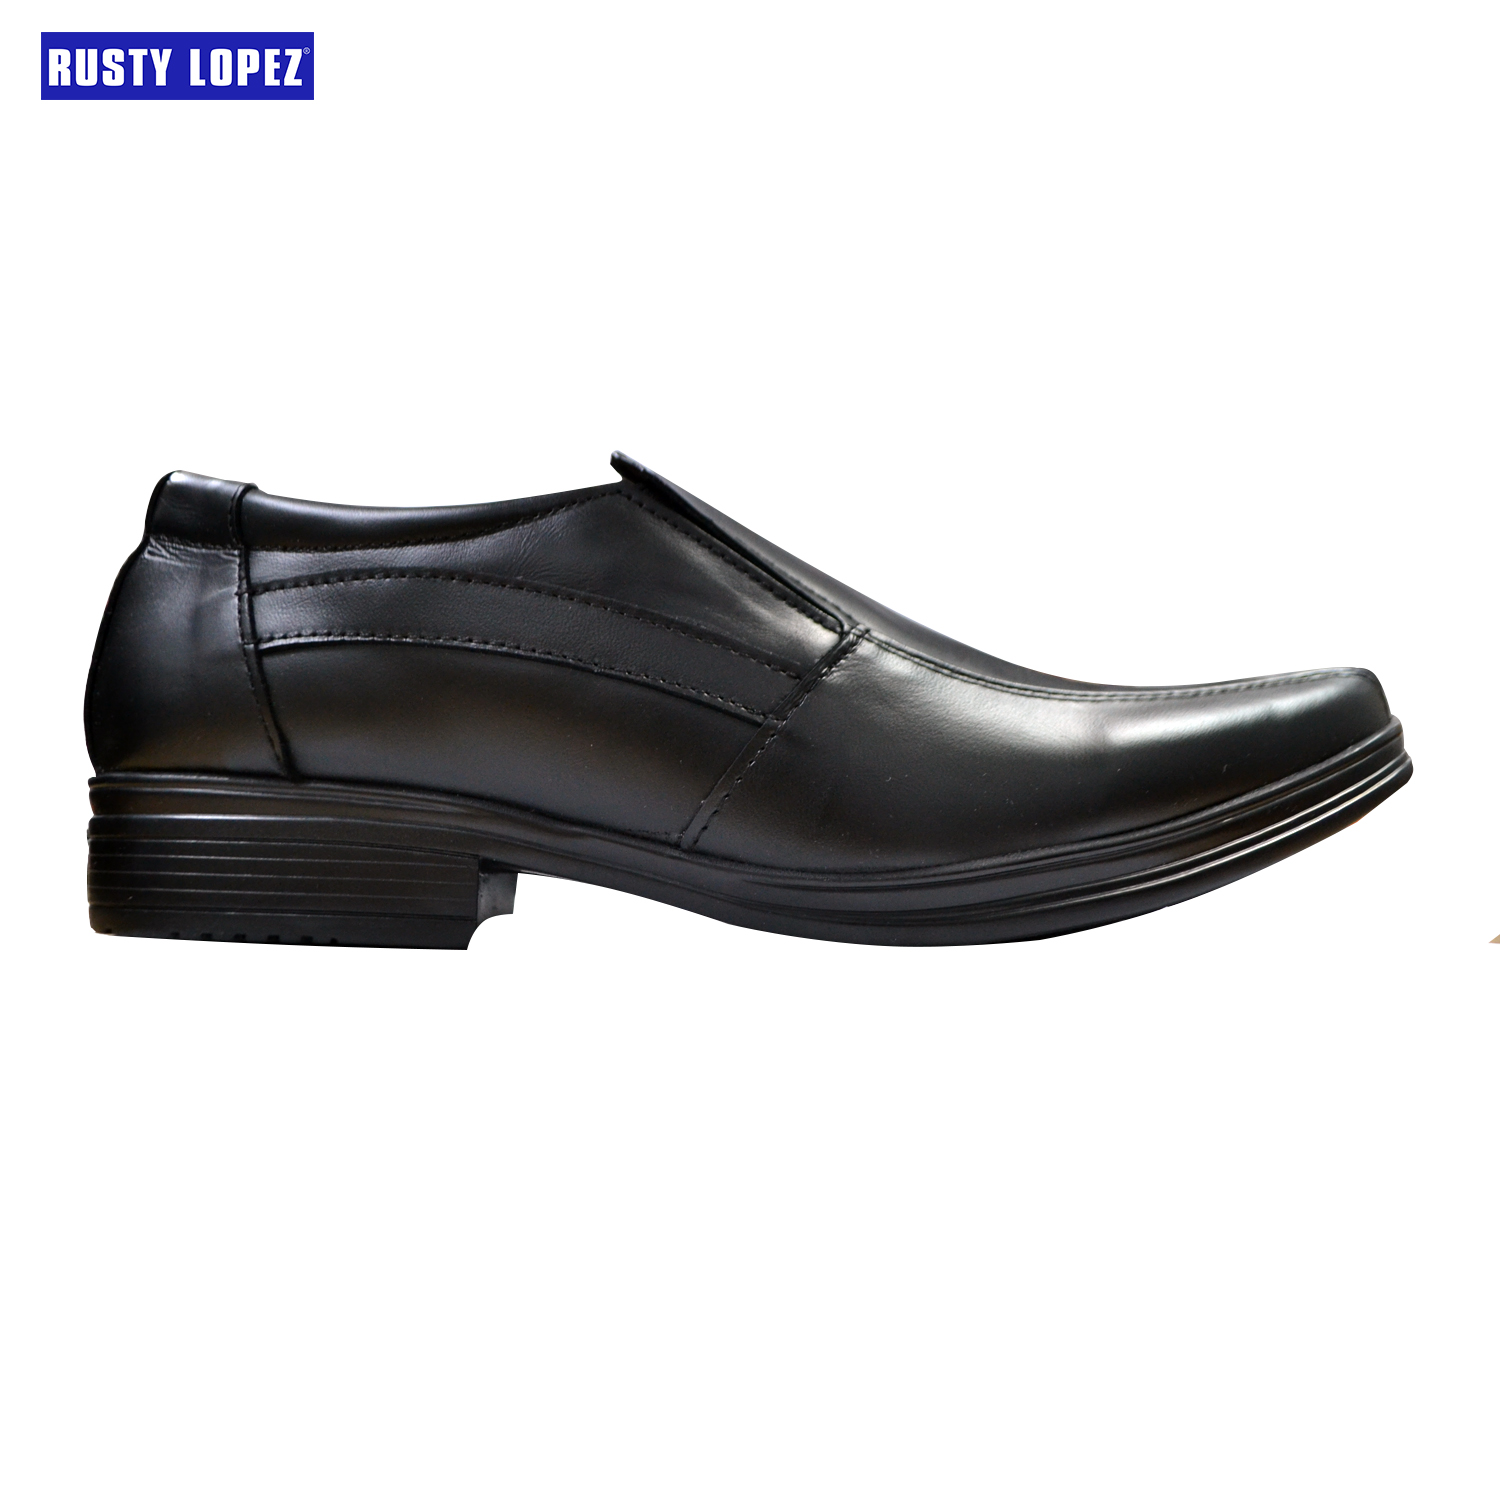 Rusty Lopez Men’s Formal Shoes – RMG23003F22